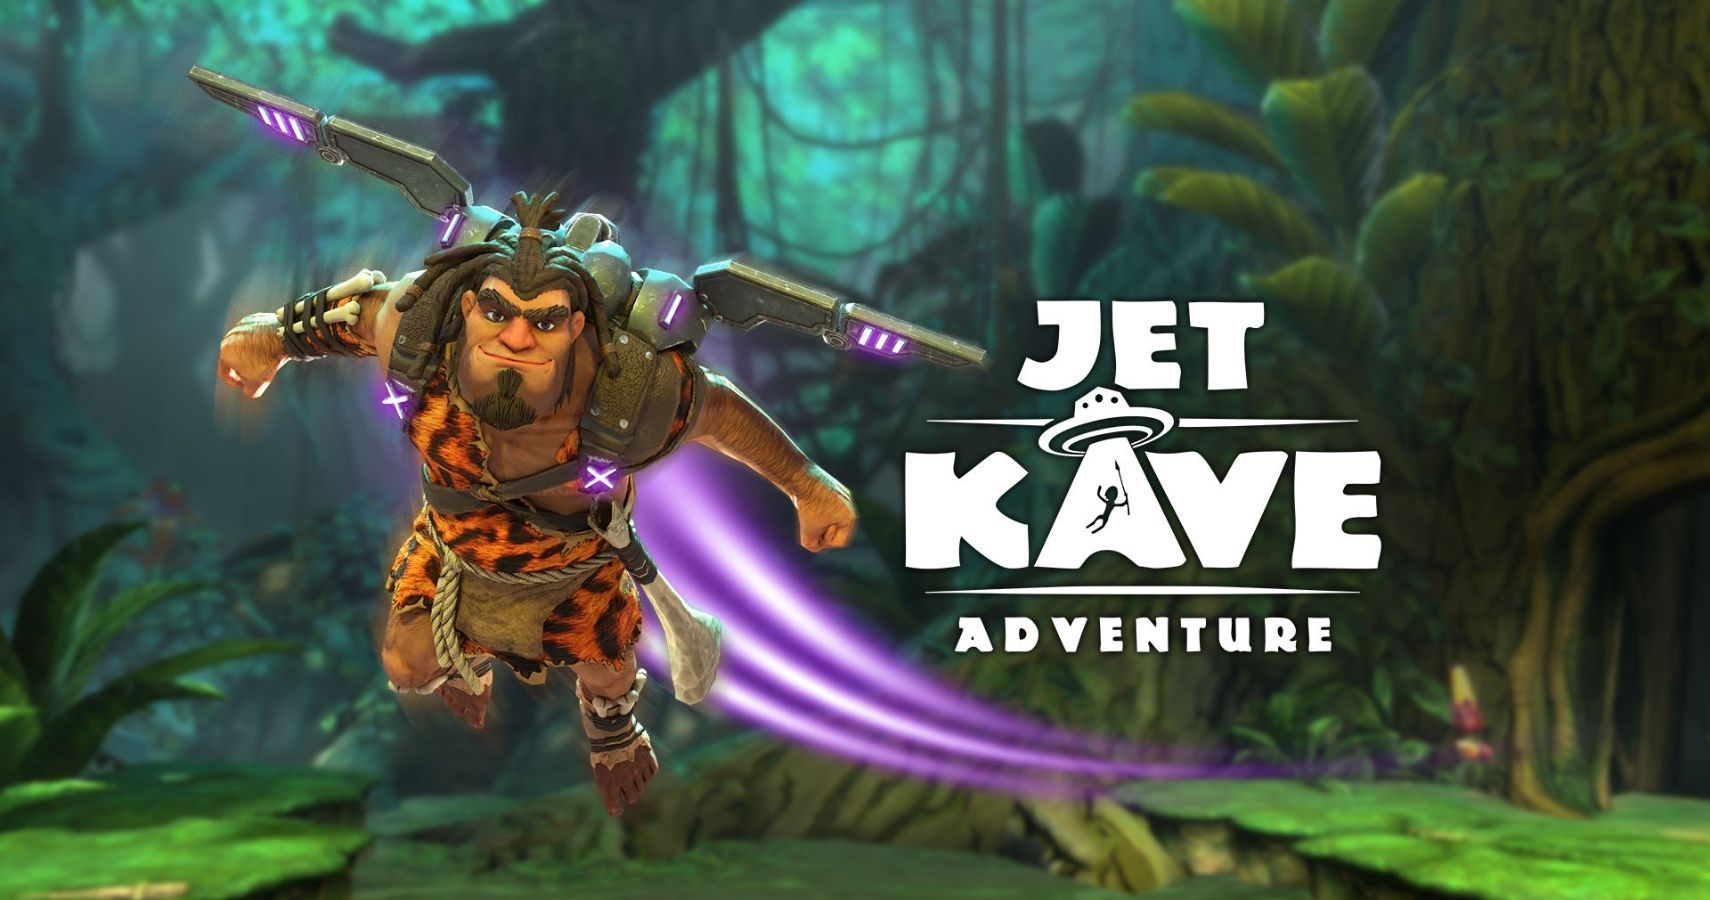 Jet Kave Adventure Announcement feature image